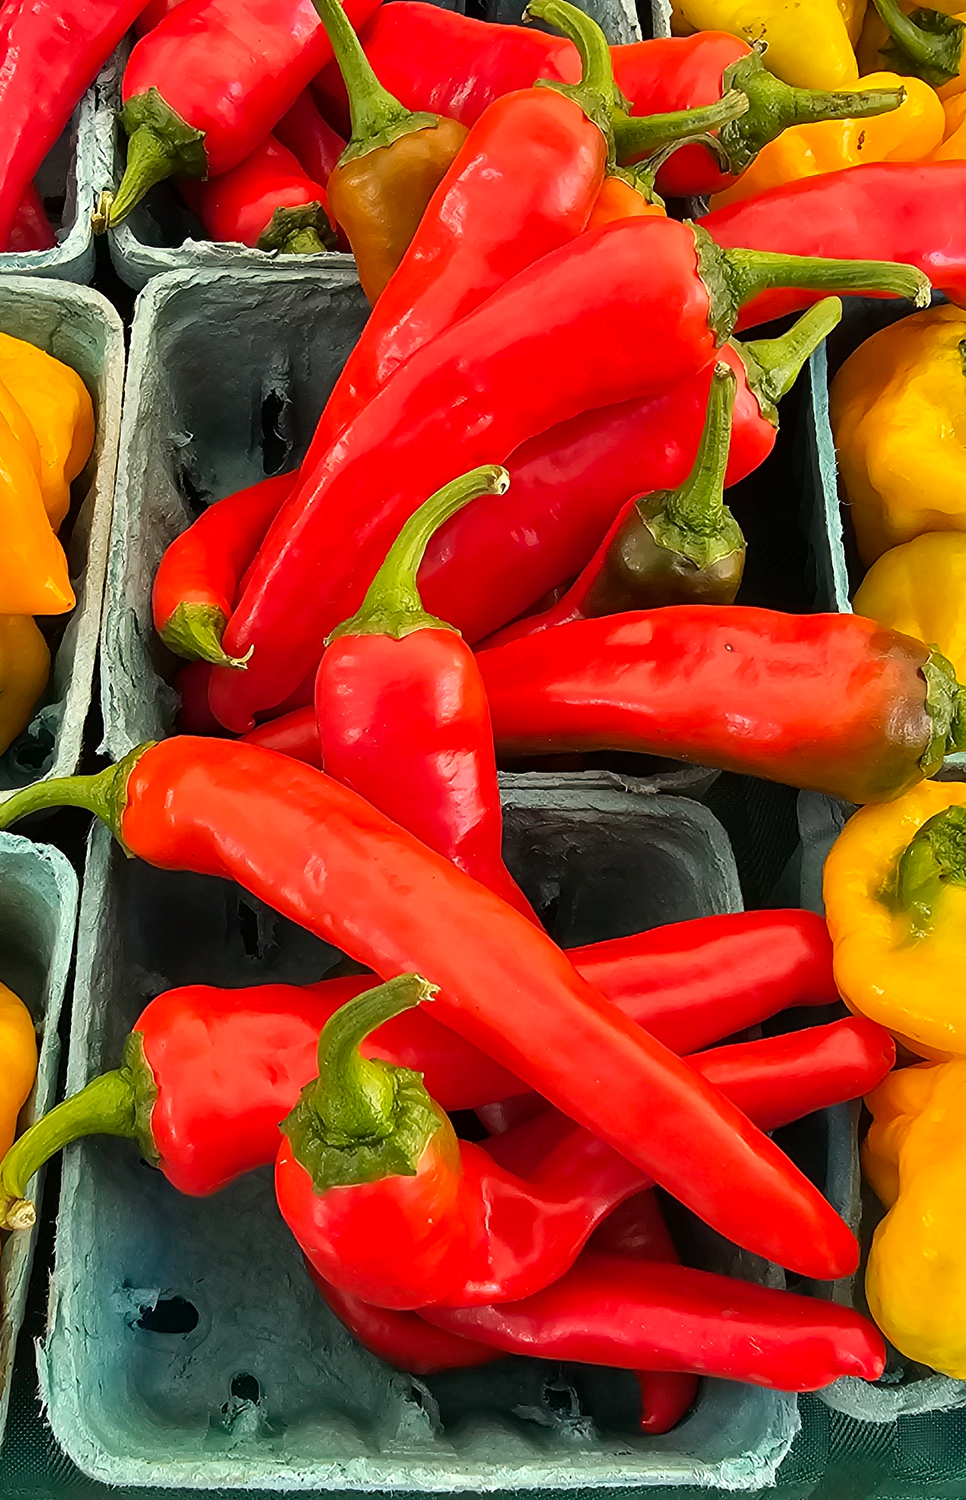 Hot pepper - var.: ring-o-fire cayenne (2 plants per pot)